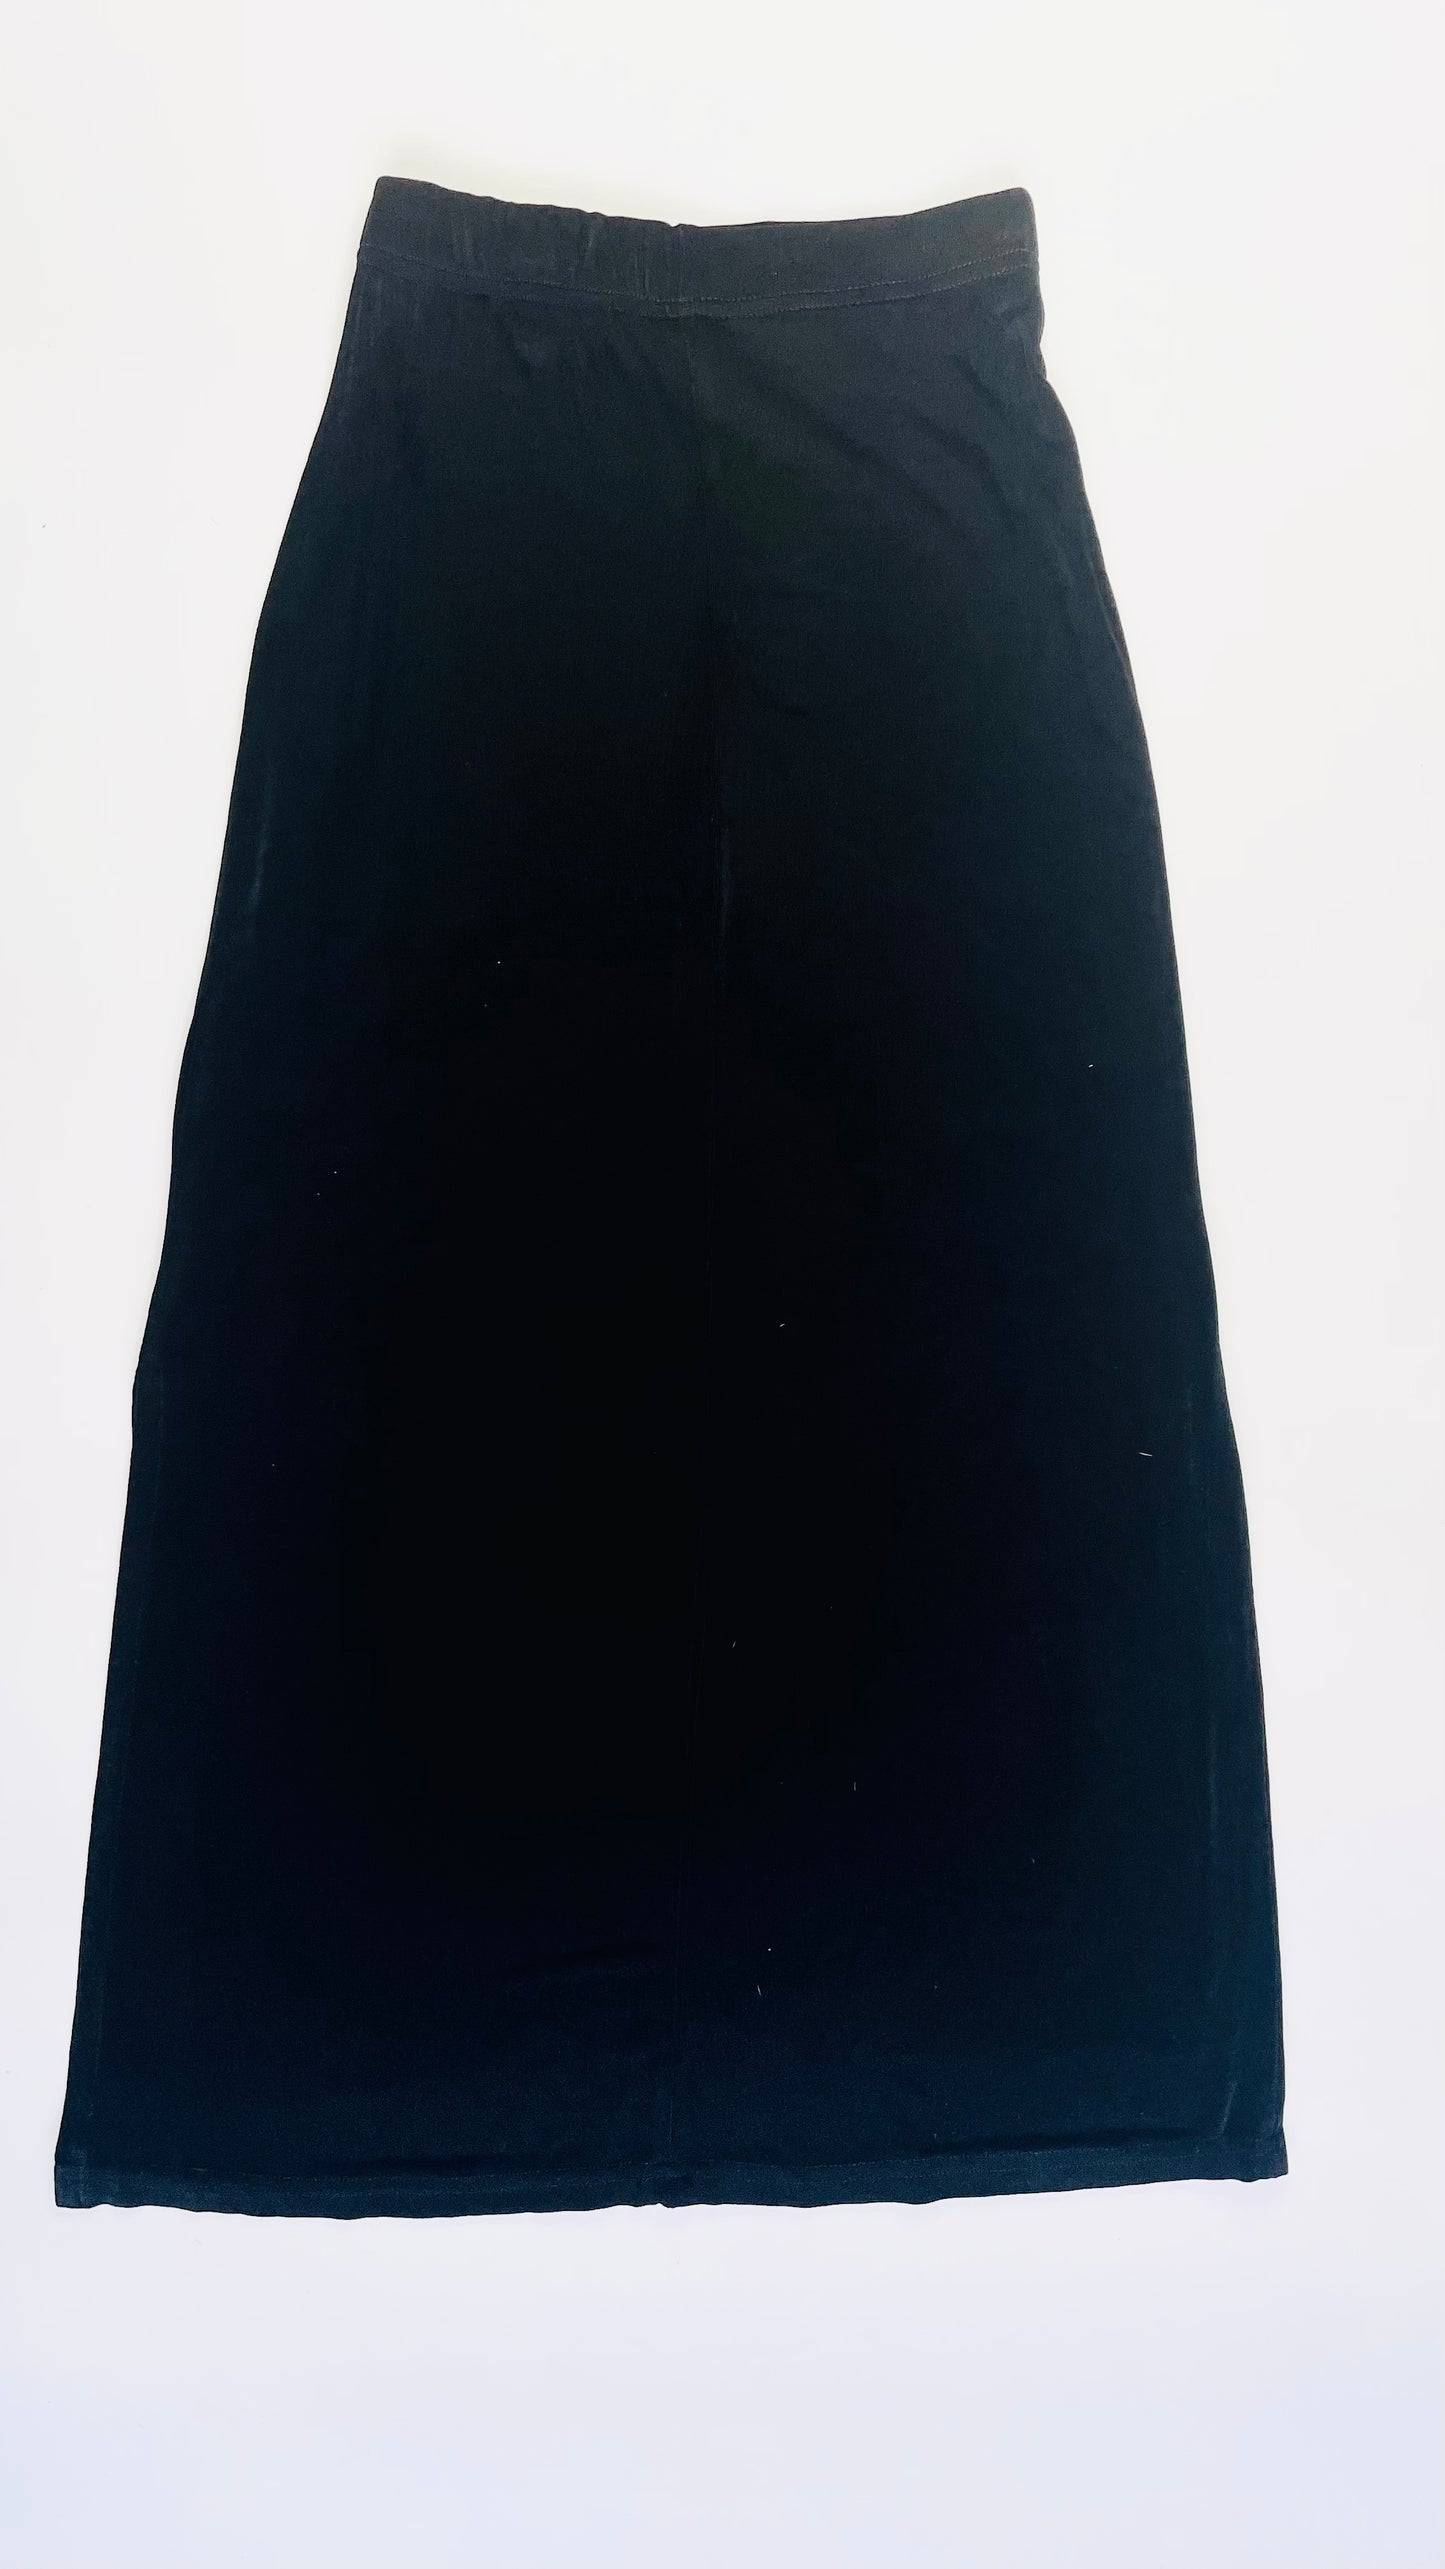 Vintage 90s black slinky maxi skirt - Size S